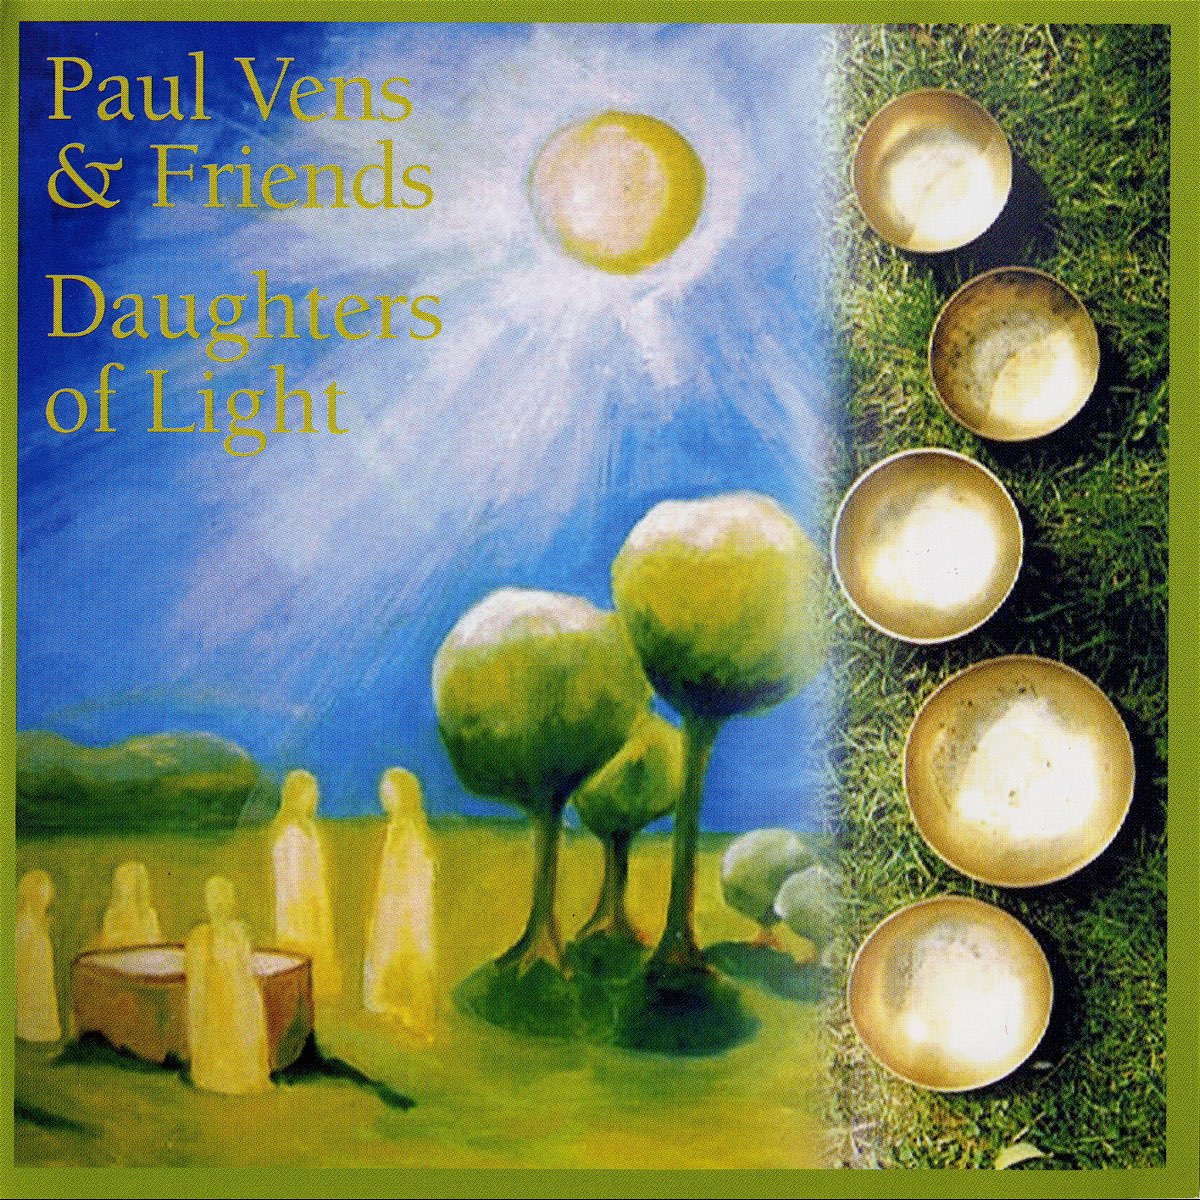 Paul light